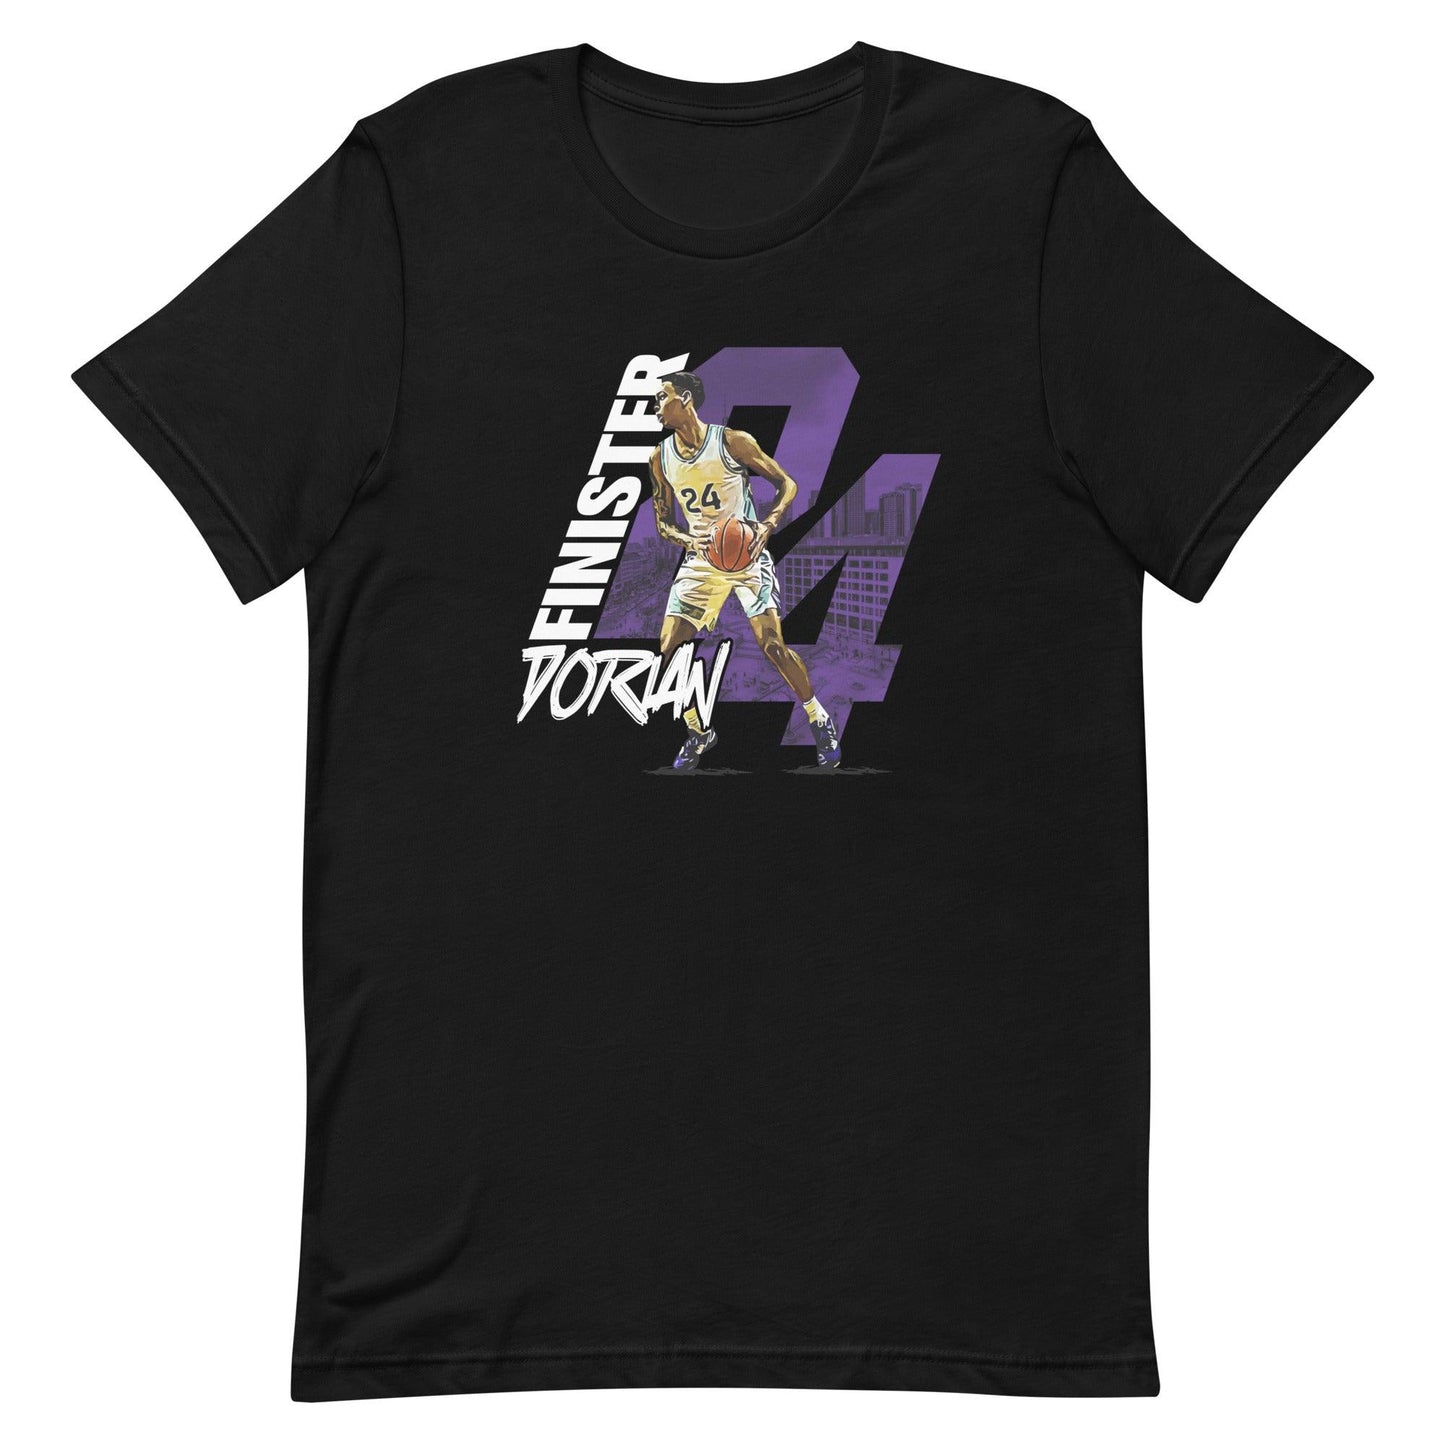 Dorian Finister "Gameday" t-shirt - Fan Arch